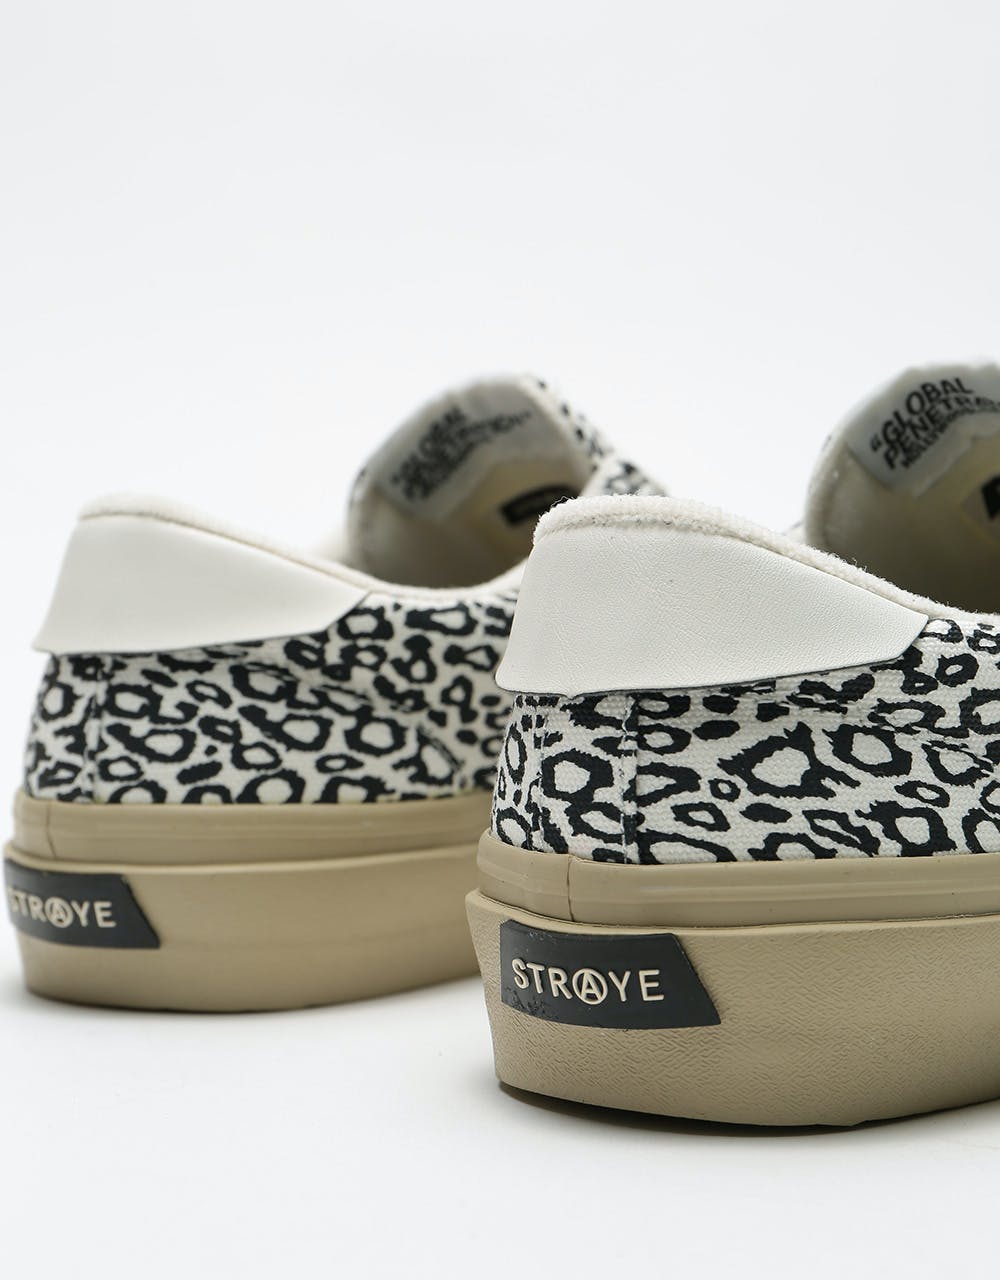 Straye Stanley Skate Shoes - Cheetah White